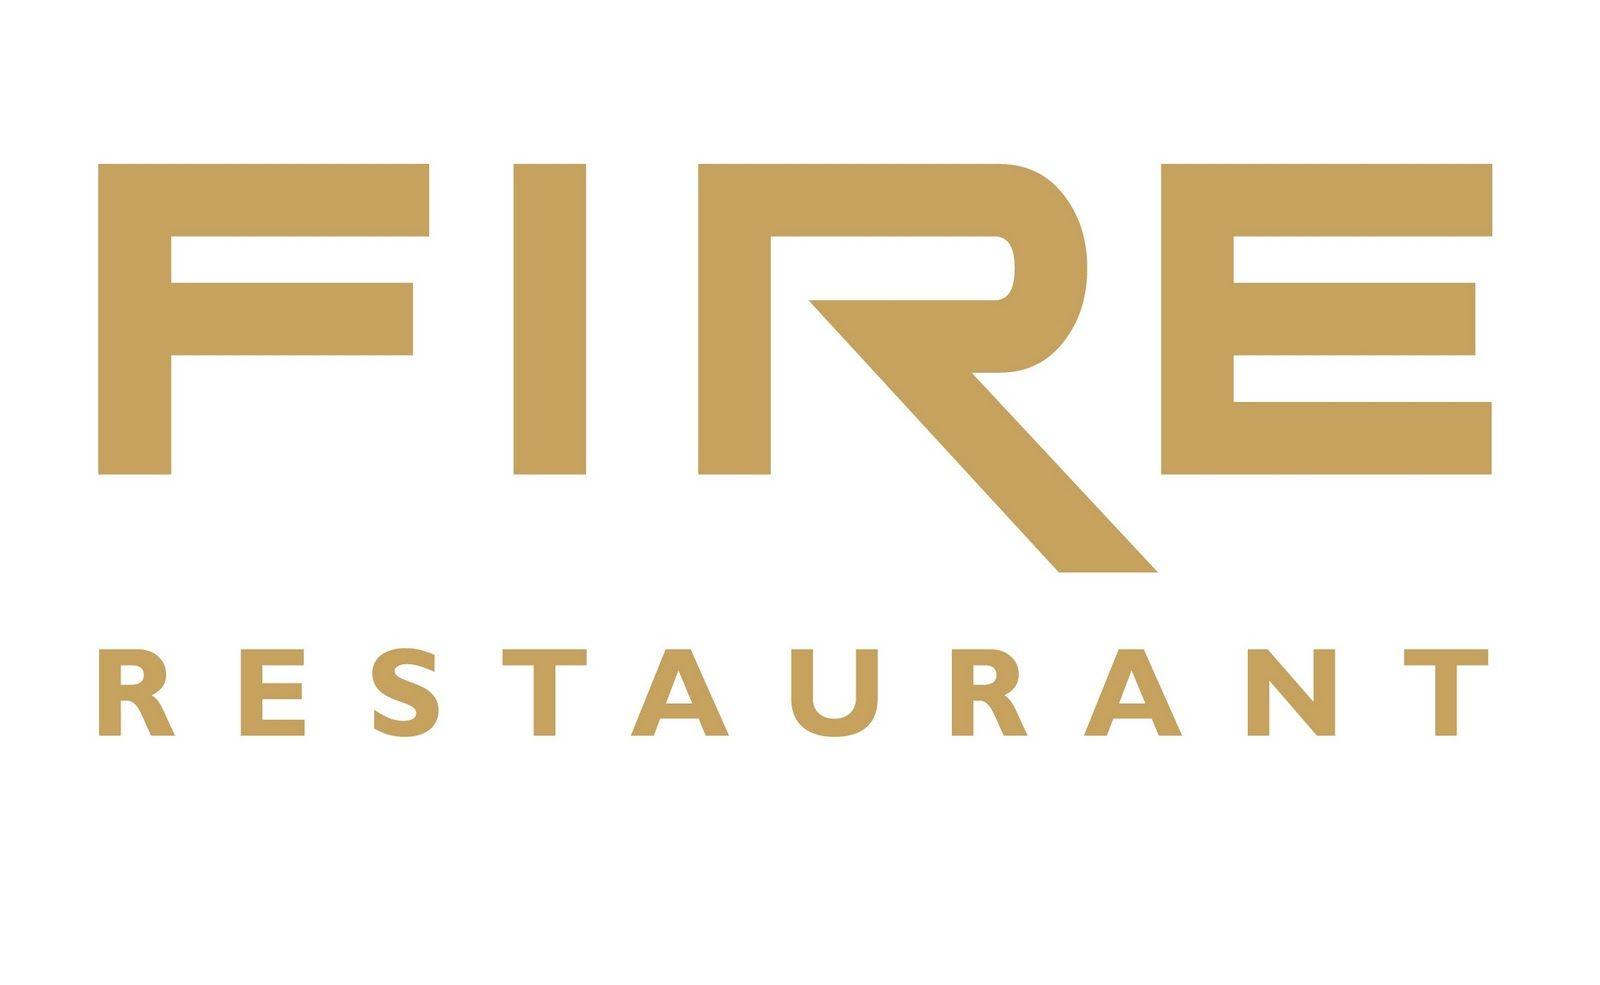 R and S Restaurant Logo - Restaurant Logos